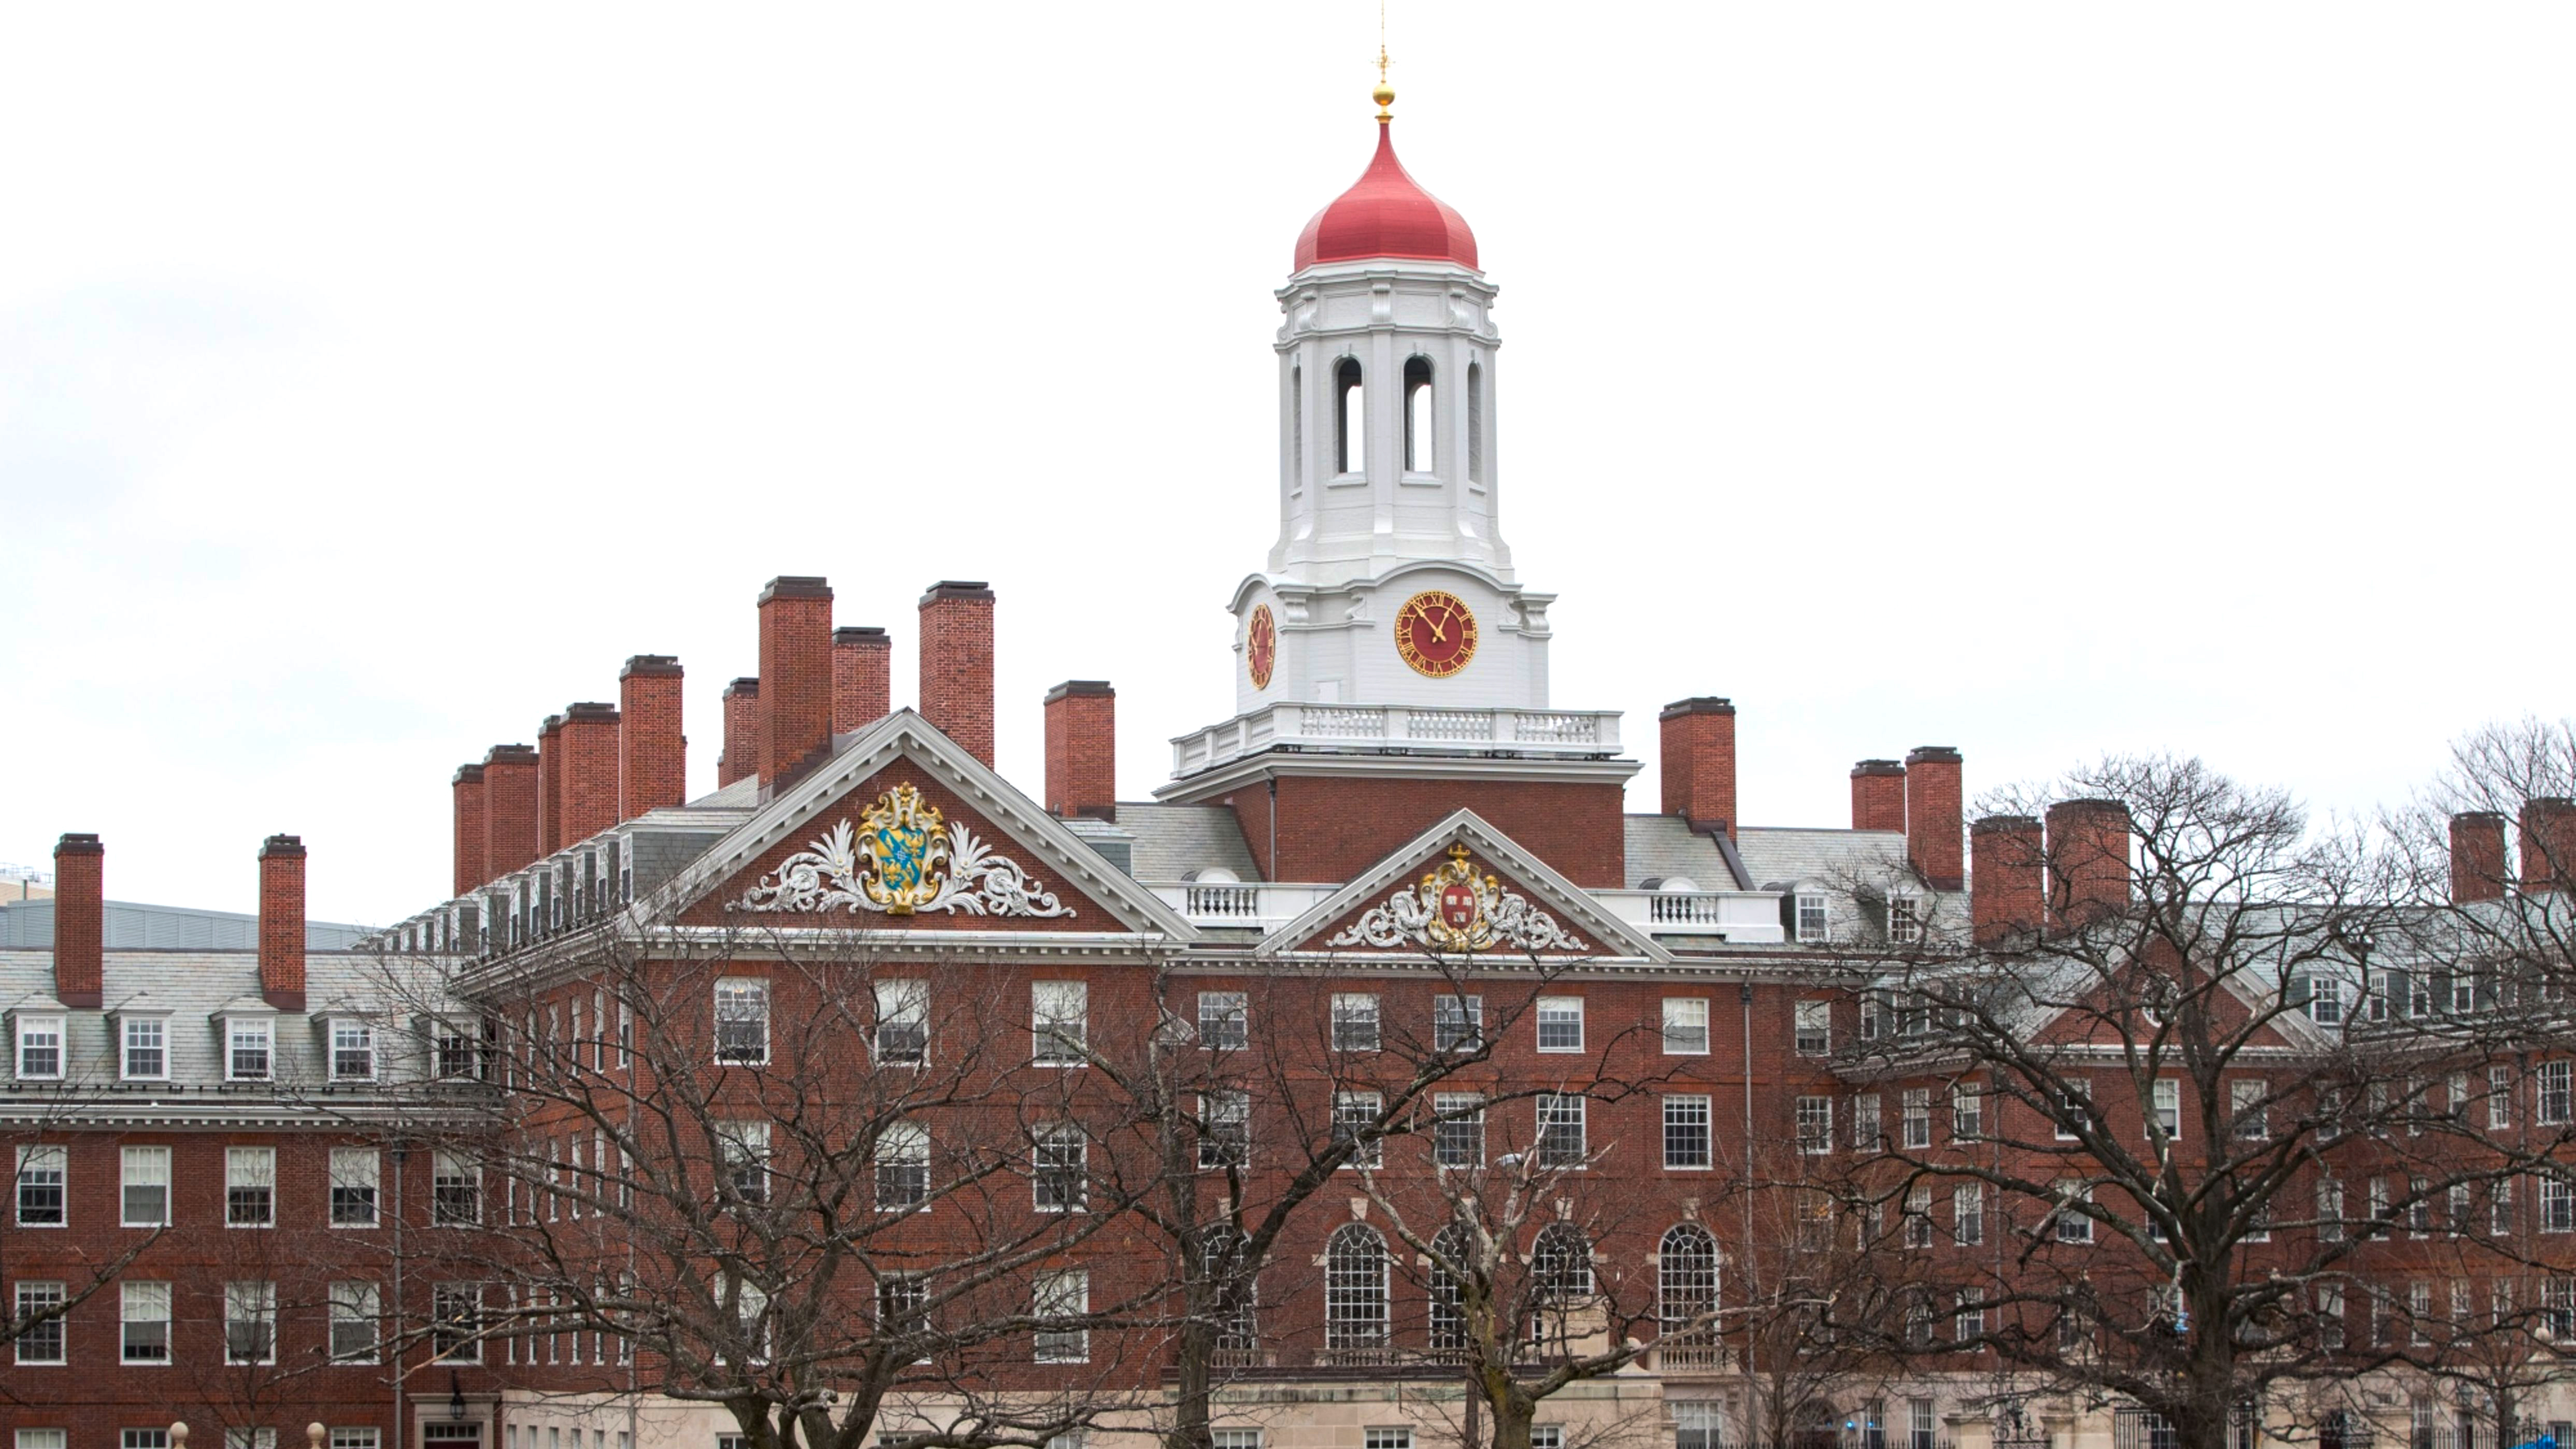 Harvard University in the United States was ranked number 5 on the "QS World University Rankings" (Photo: Scott Eisen/Bloomberg)